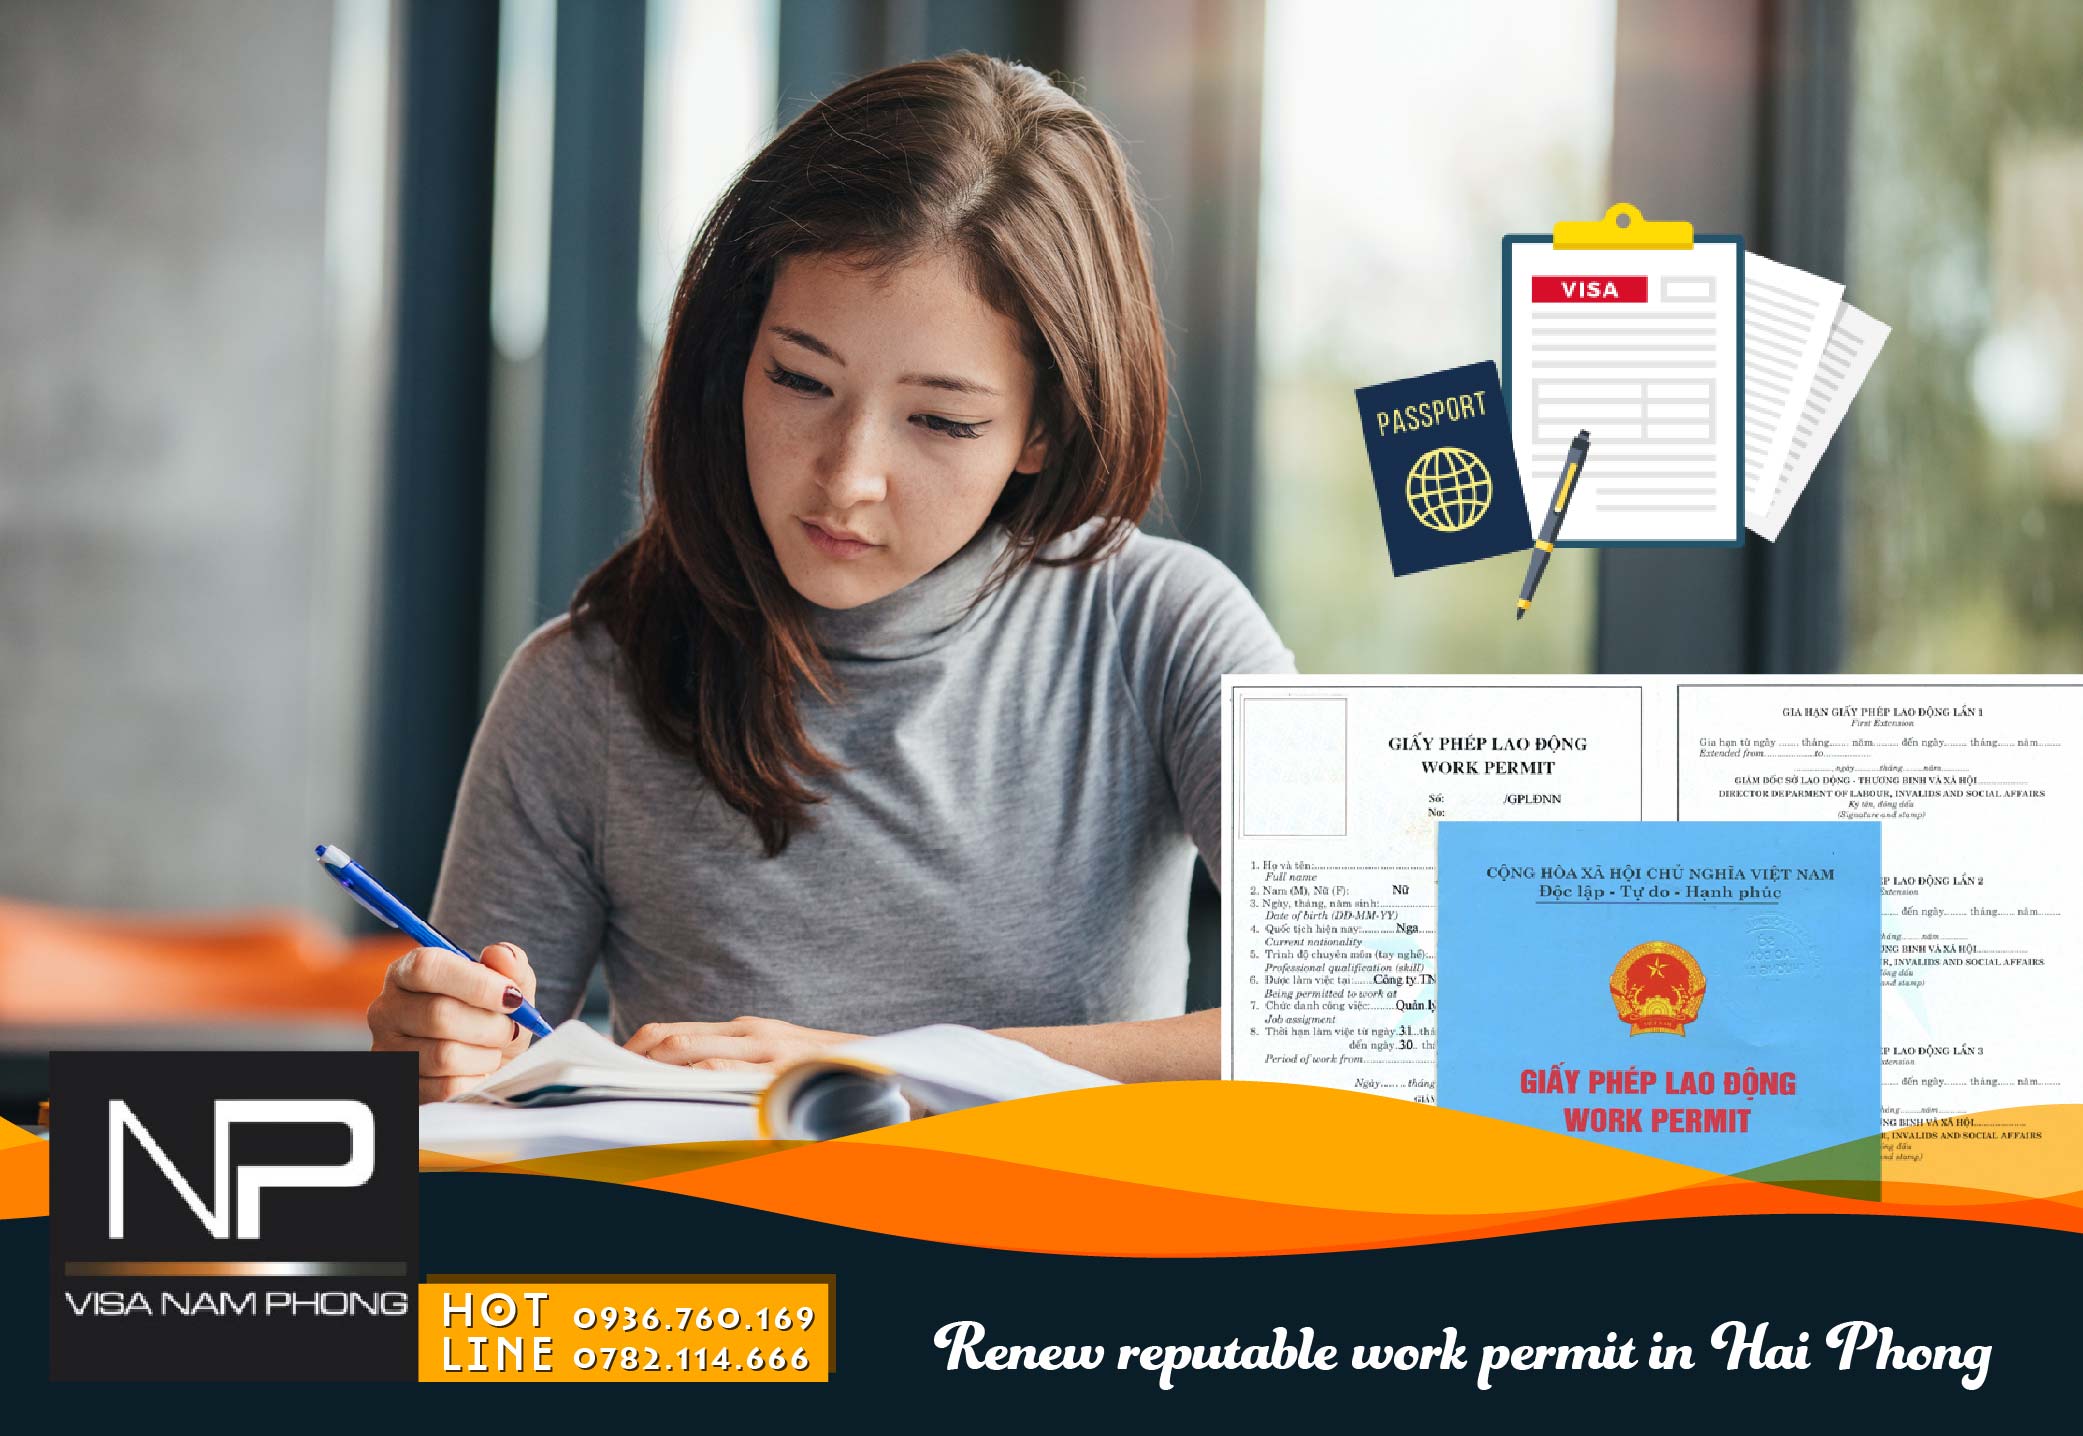 Renew reputable work permit in Hai Phong